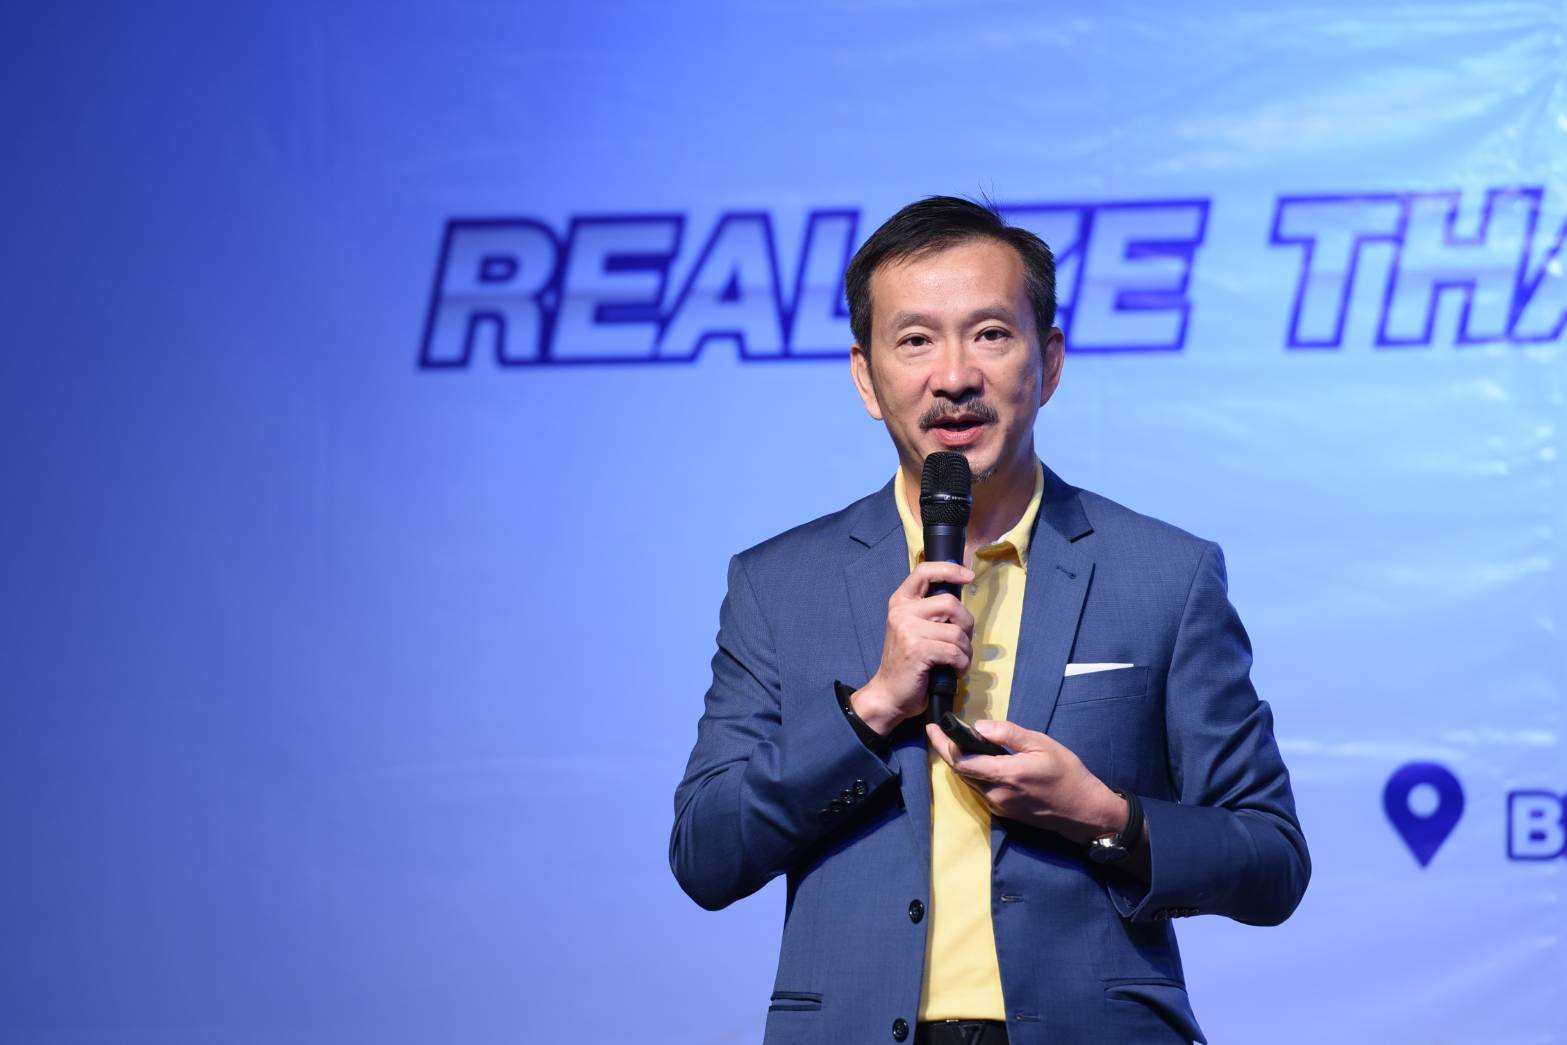 CEO บางจากฯ ร่วมเป็น Keynote Speaker ในงาน Realize Thailand 4.0 with IOT Innovation